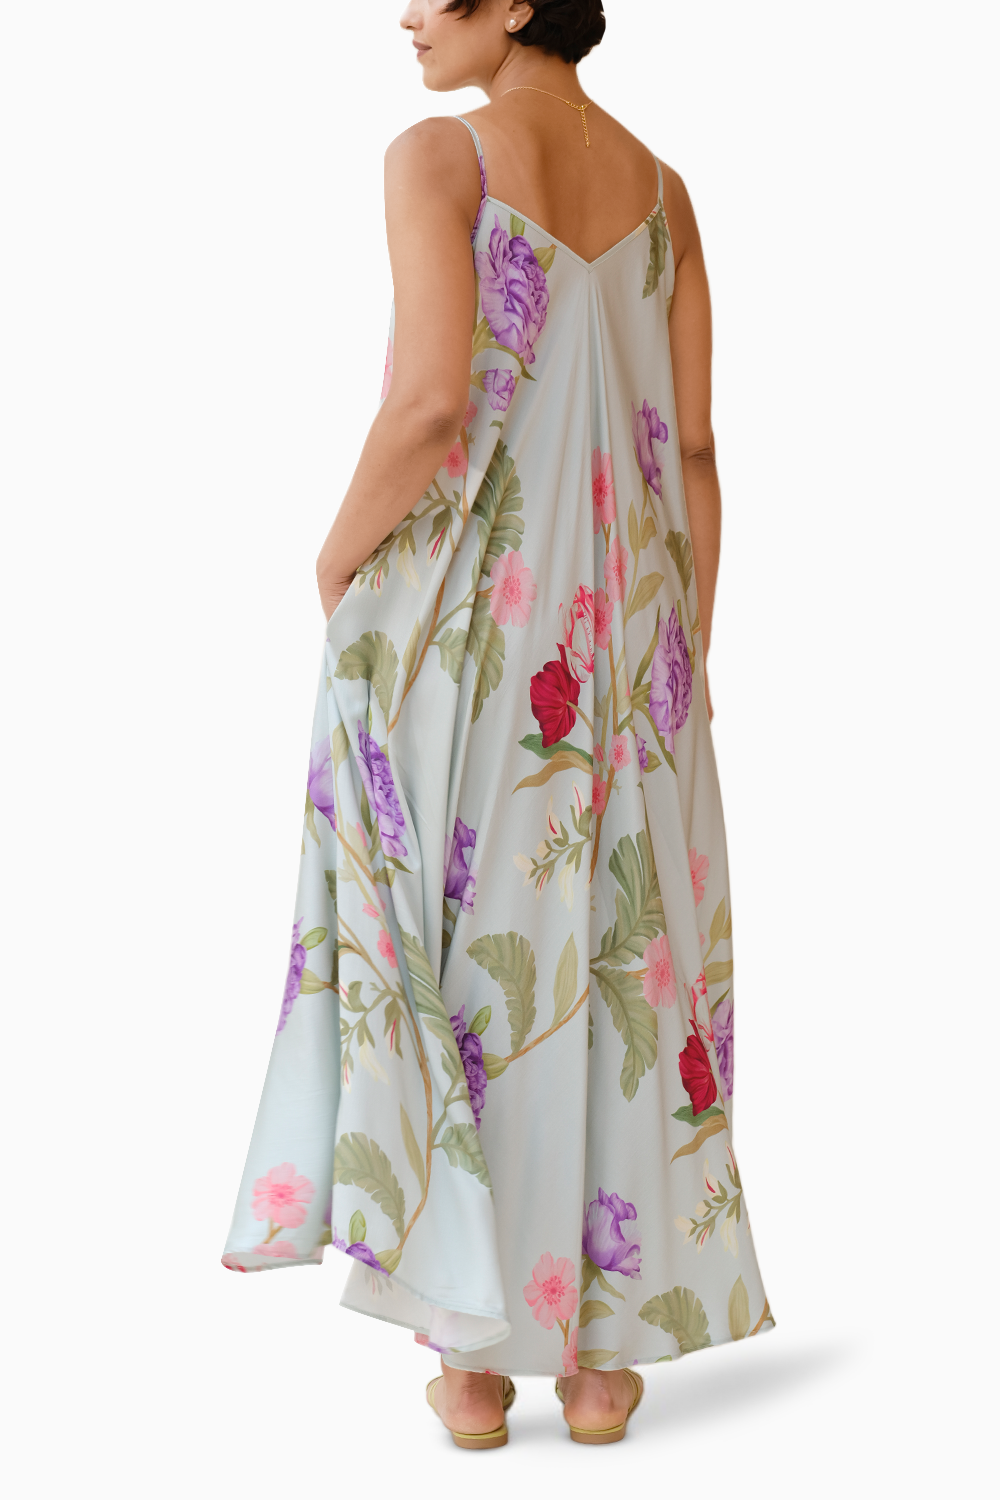 Celeste Floral Dream Lounge Cami Dress